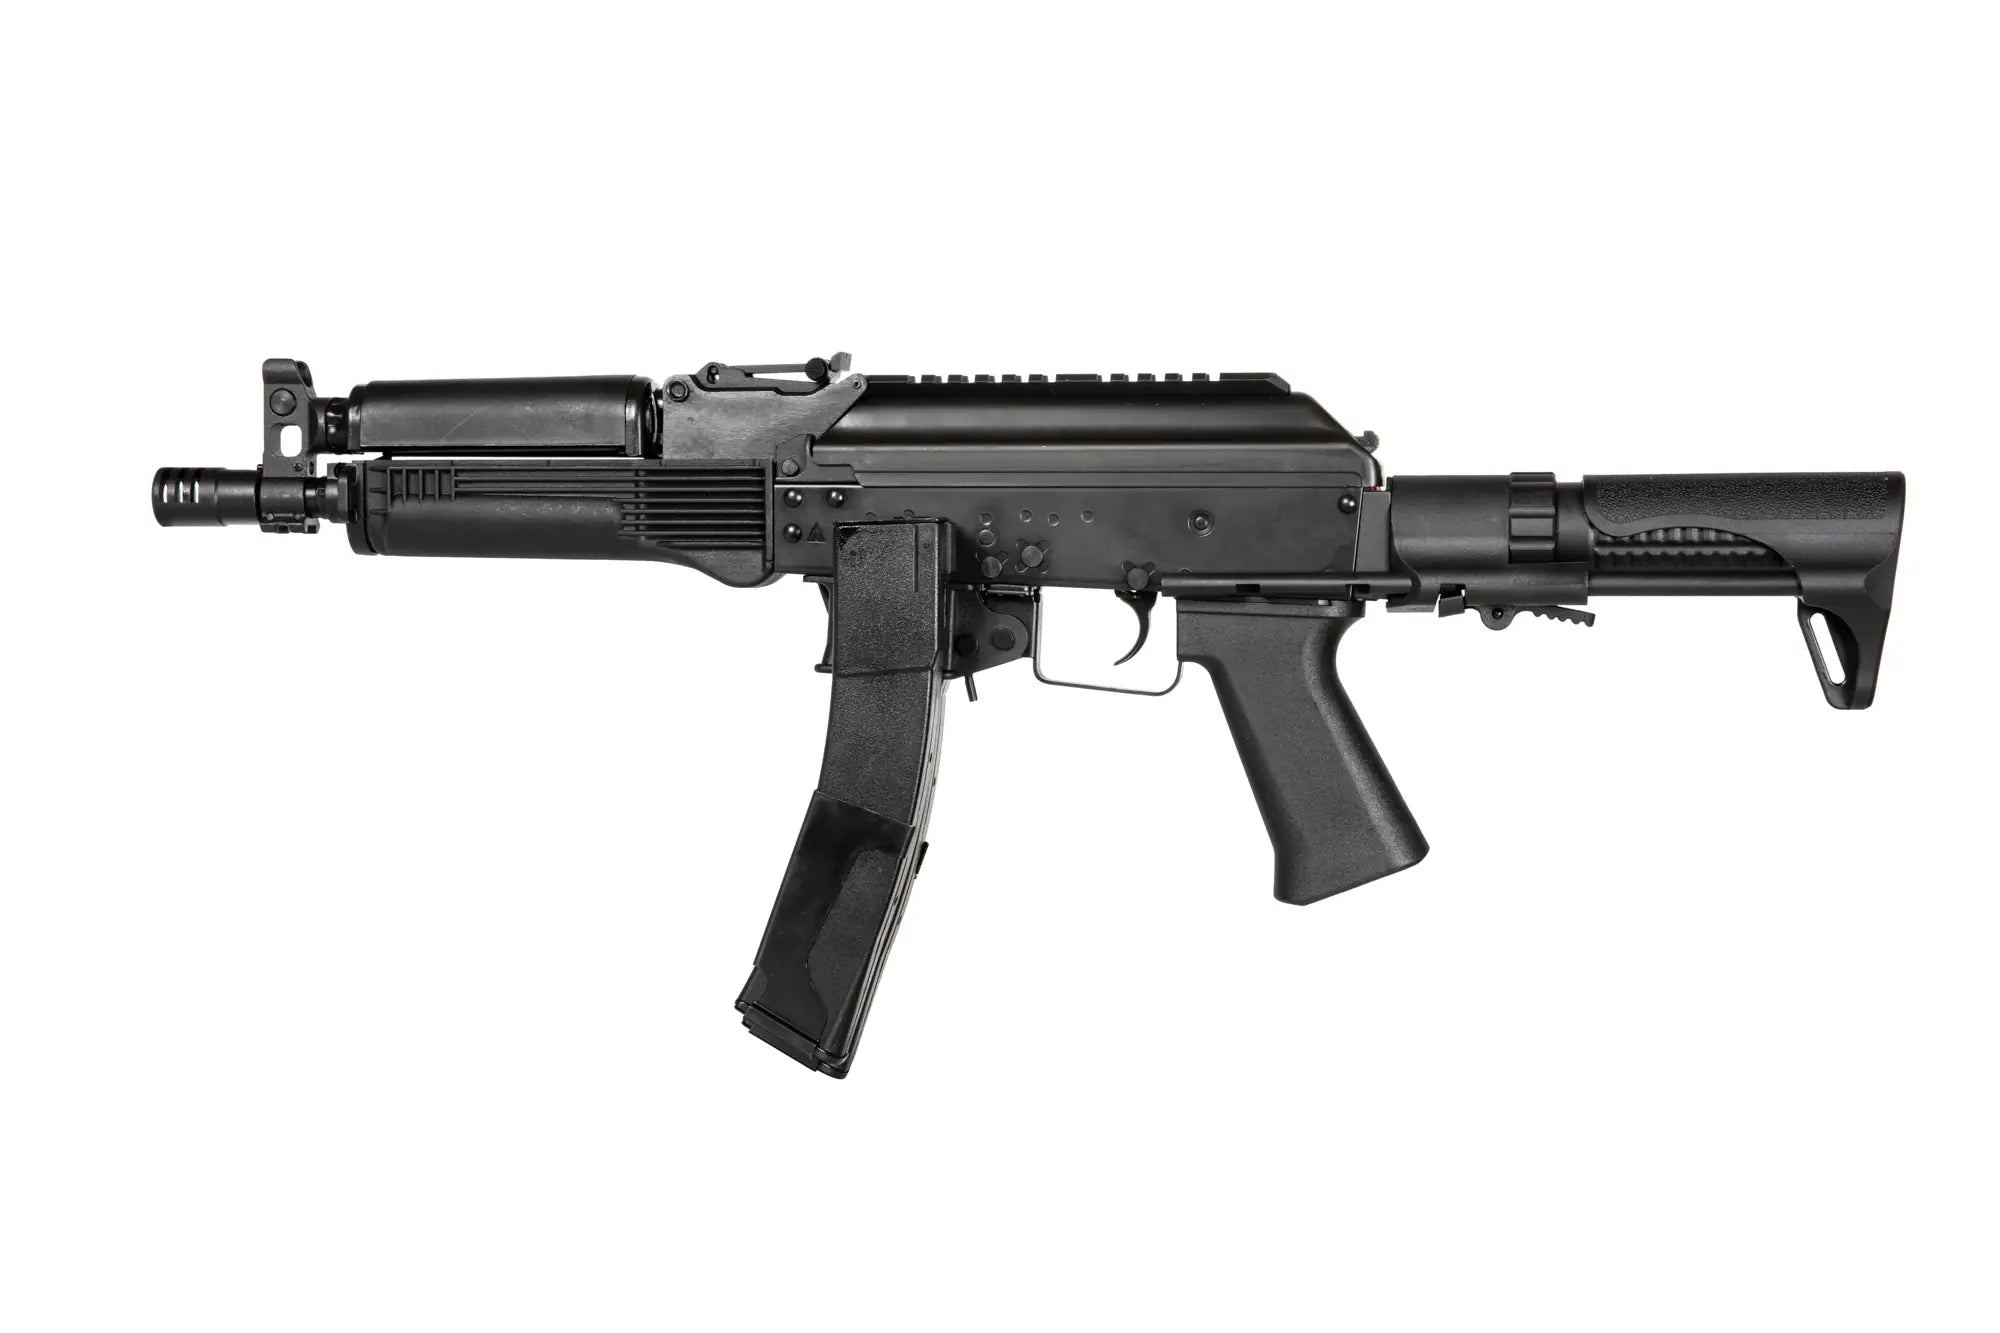 PP-19-01 Vityaz PDW Submachine Gun Replica